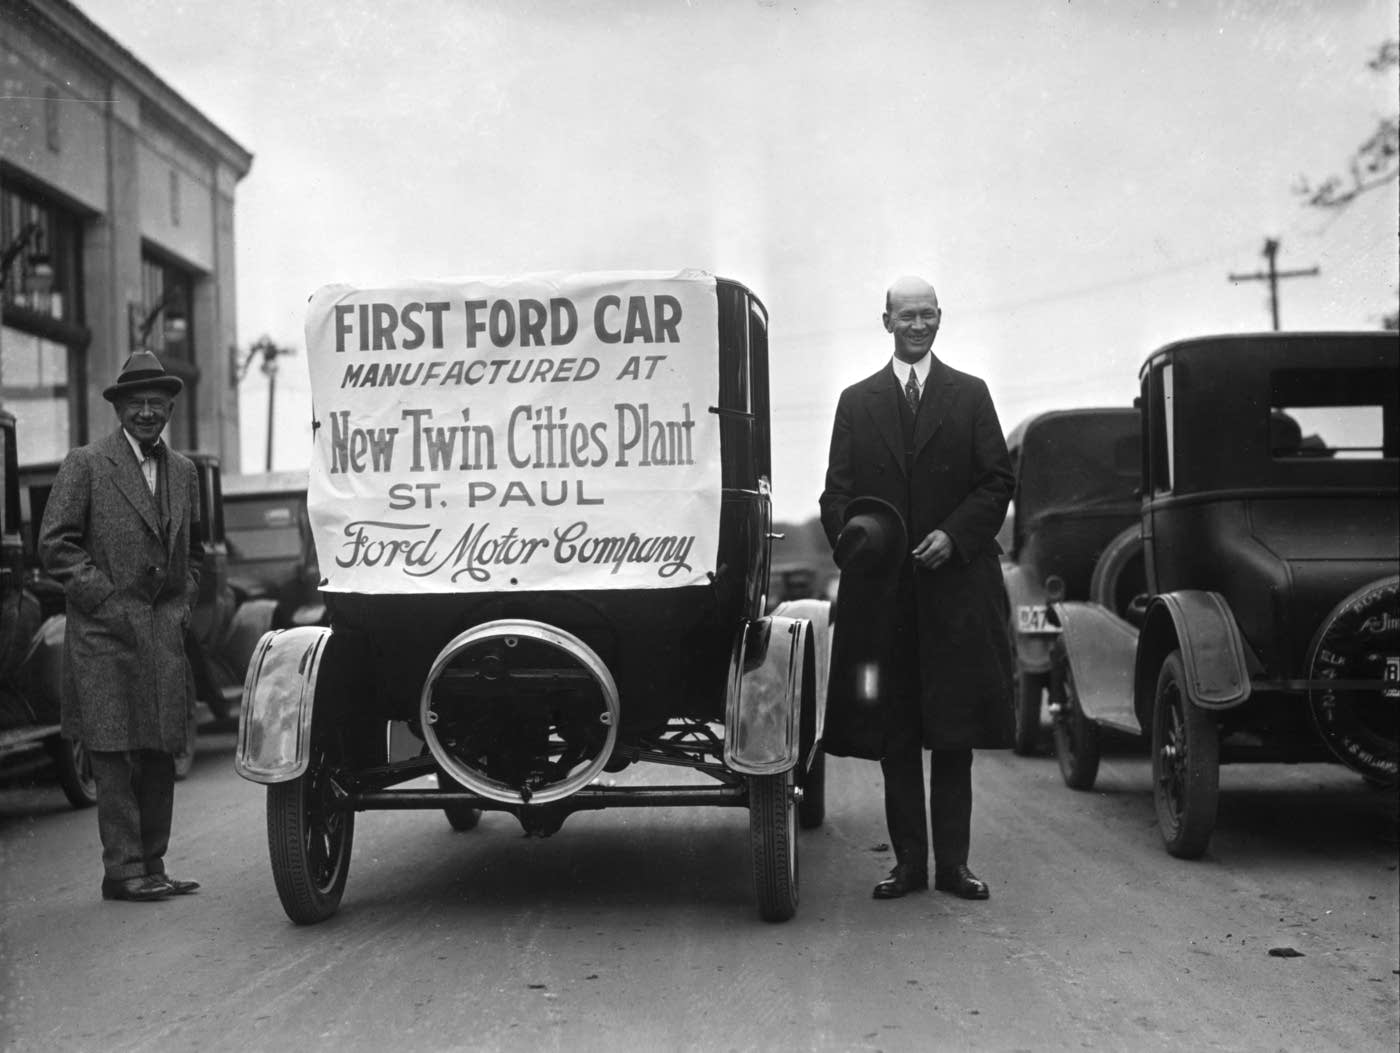 Ford's First Car circa 1925 (MNHS)